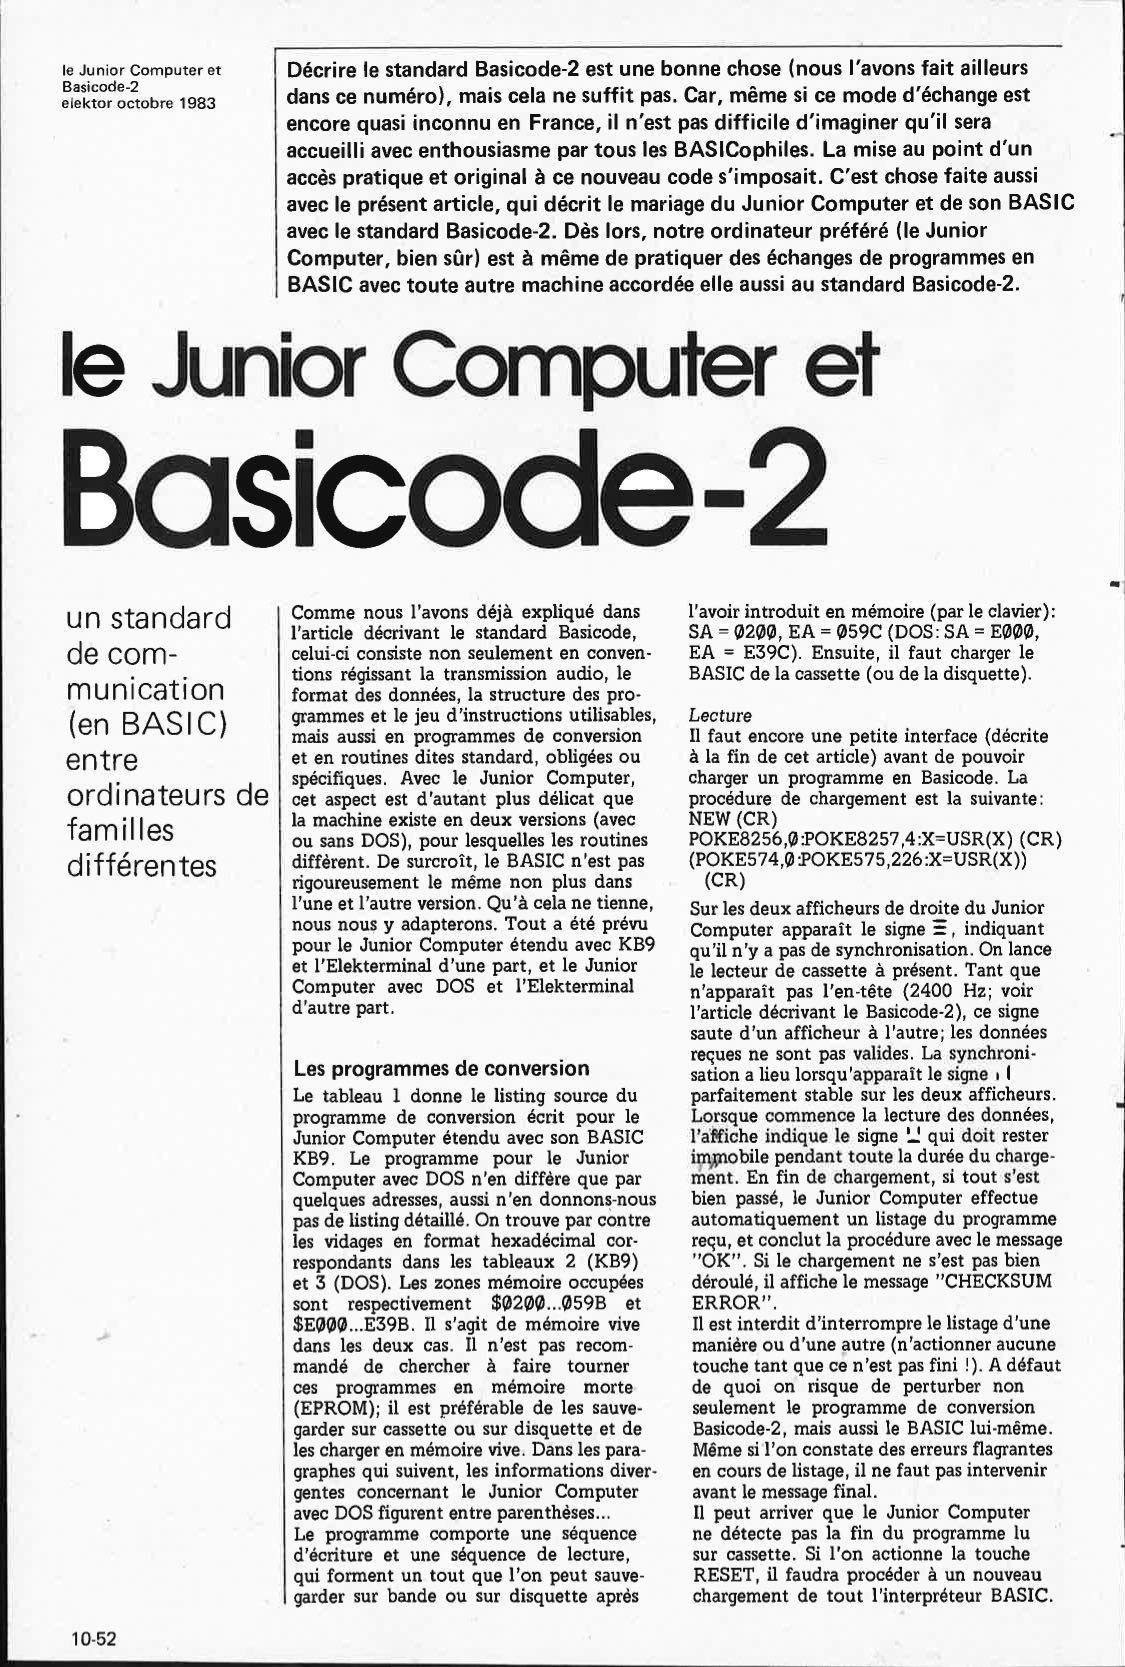 le Junior Computer et Basicode-2